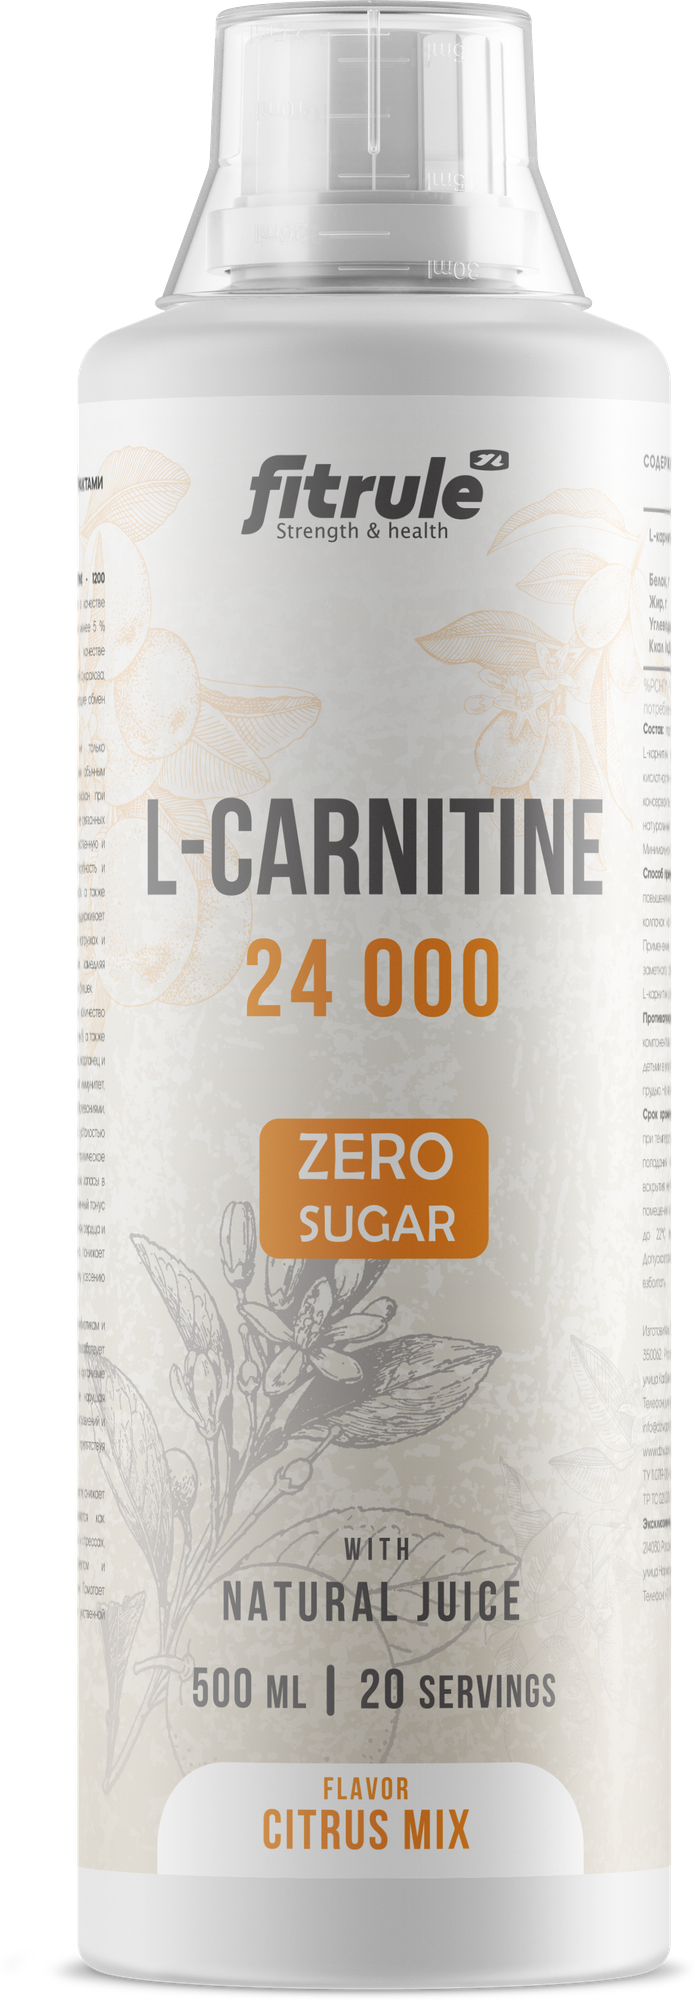 L-carnitine Л-карнитин л карнитин 500ml Цитрус